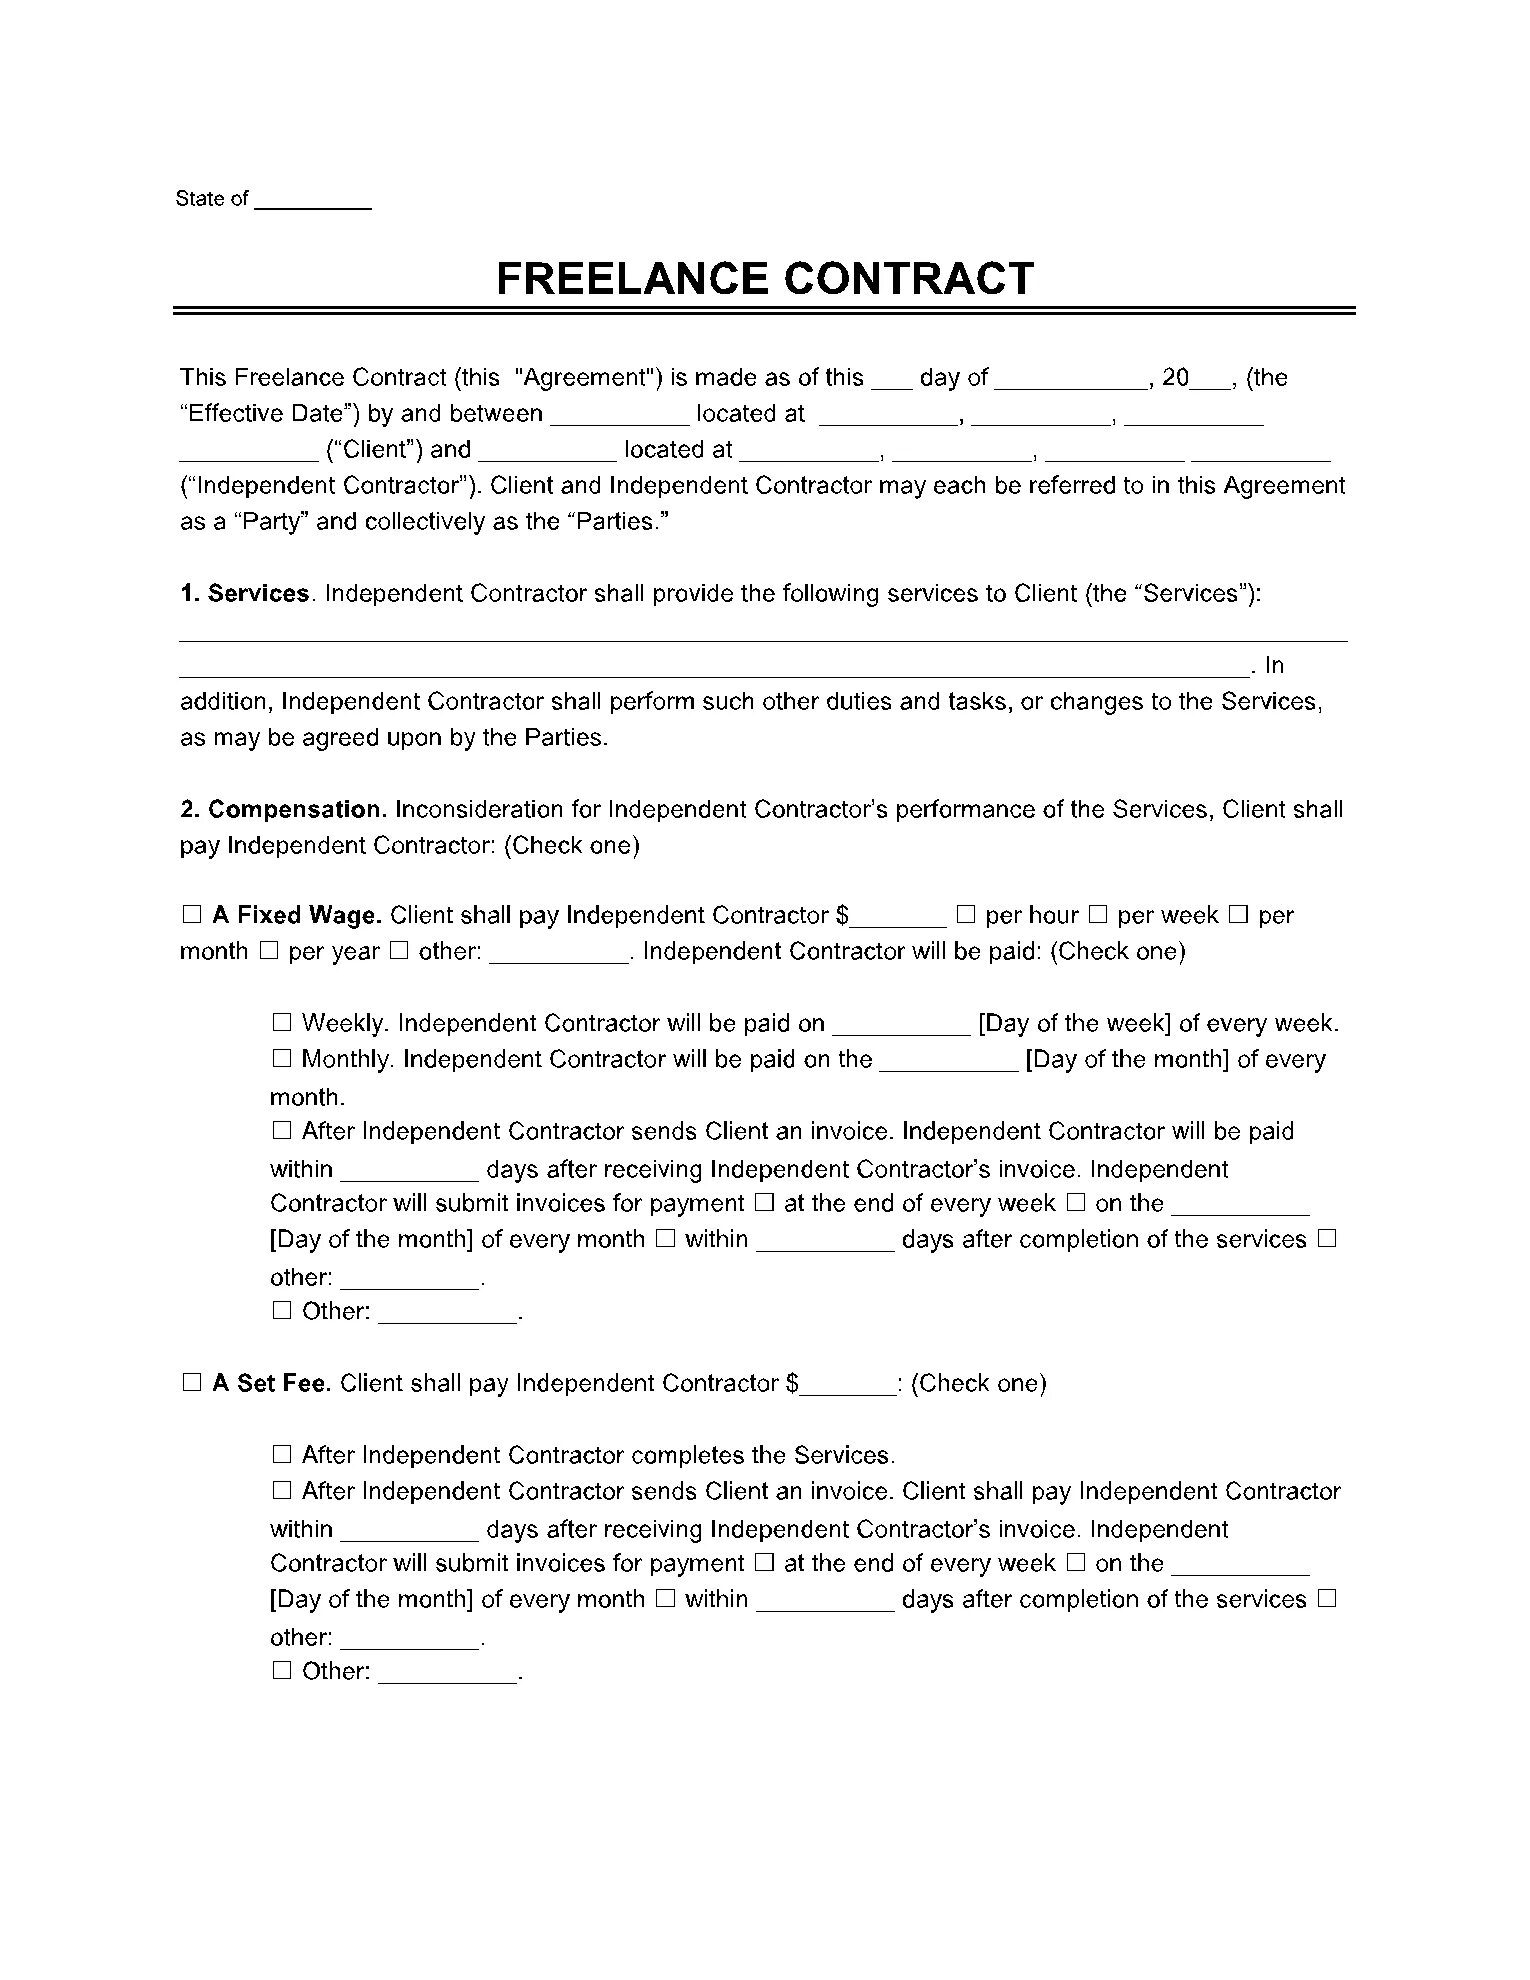 Договор фрилансера. Freelance Contract. Контракт фрилансера. Freelance Contract Generator.